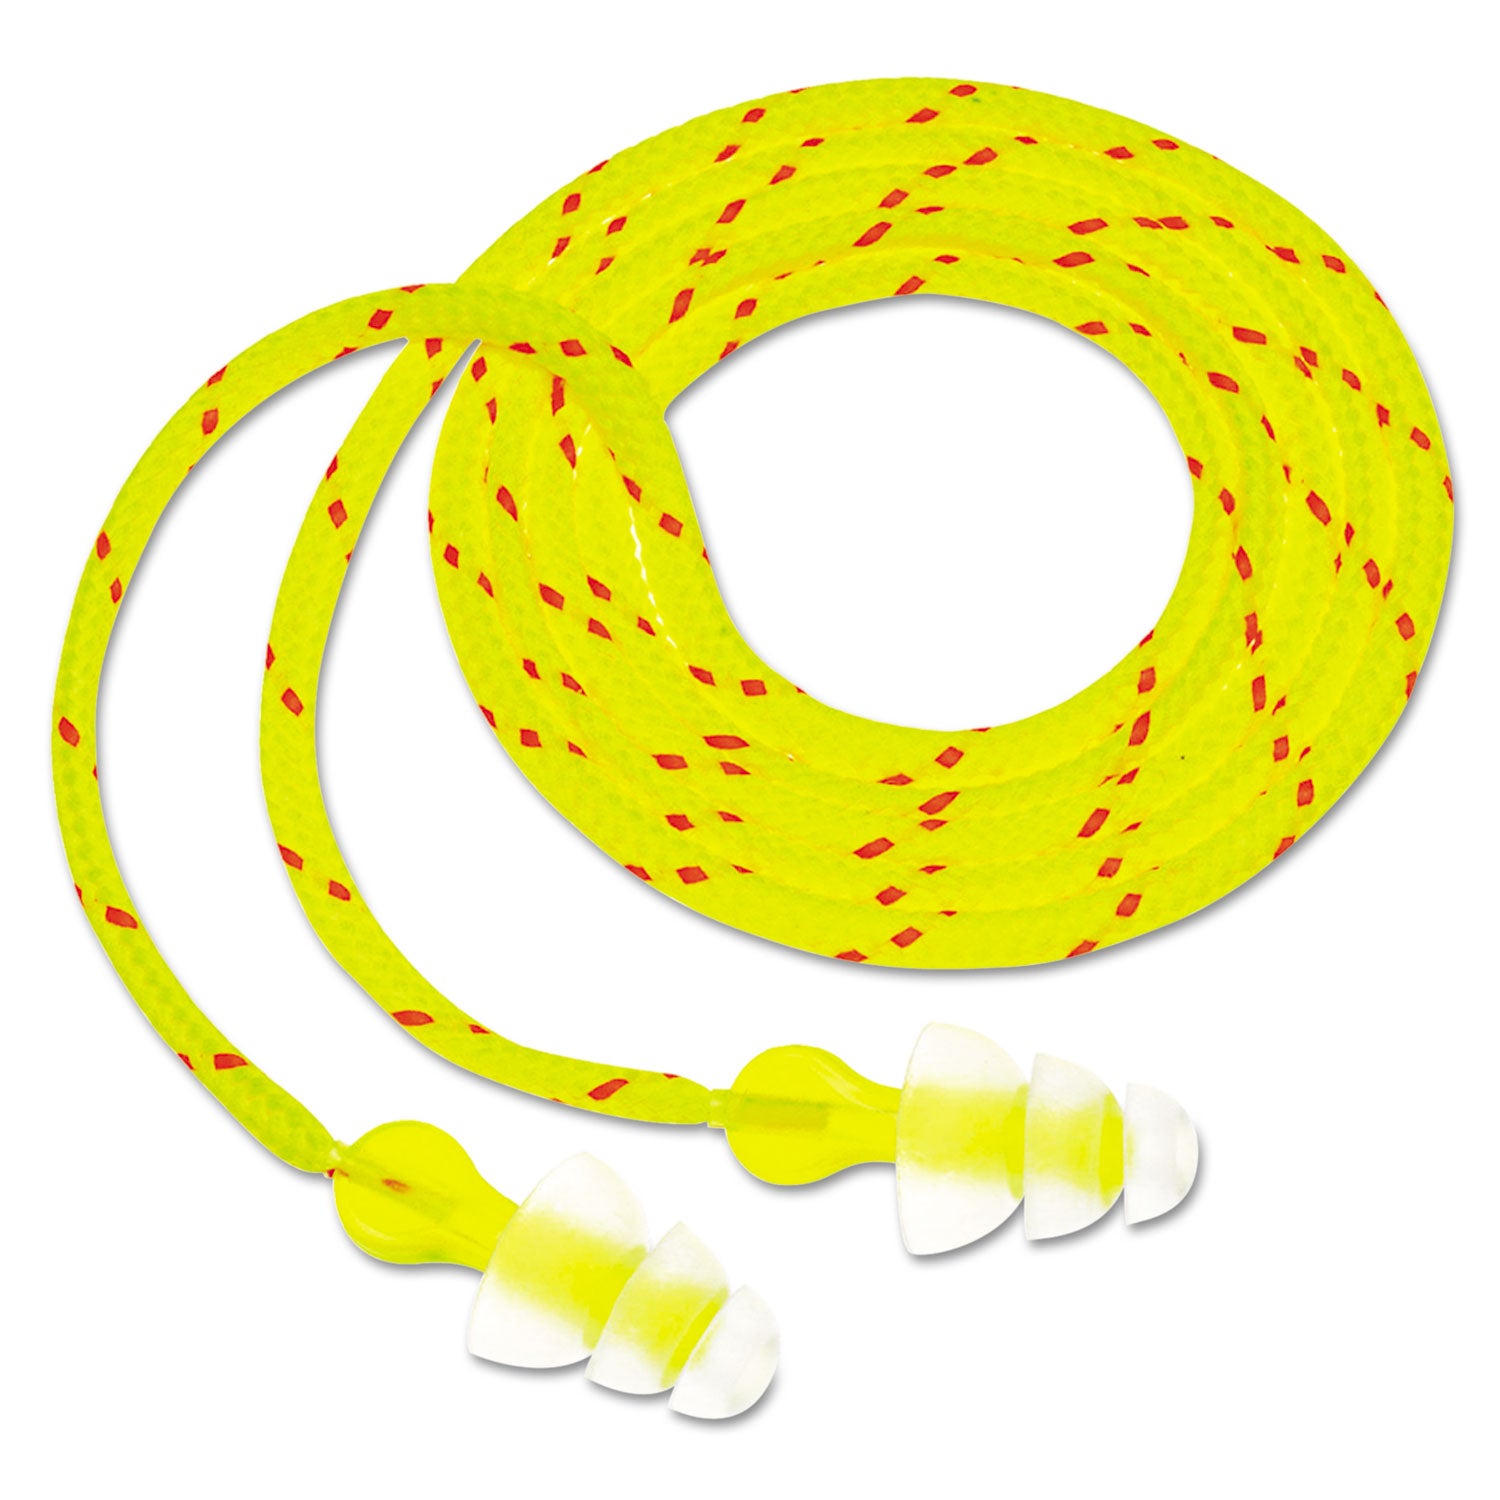 tri-flange-earplugs-corded-26-db-nrr-yellow-orange-100-pairs_mmmp3001 - 1